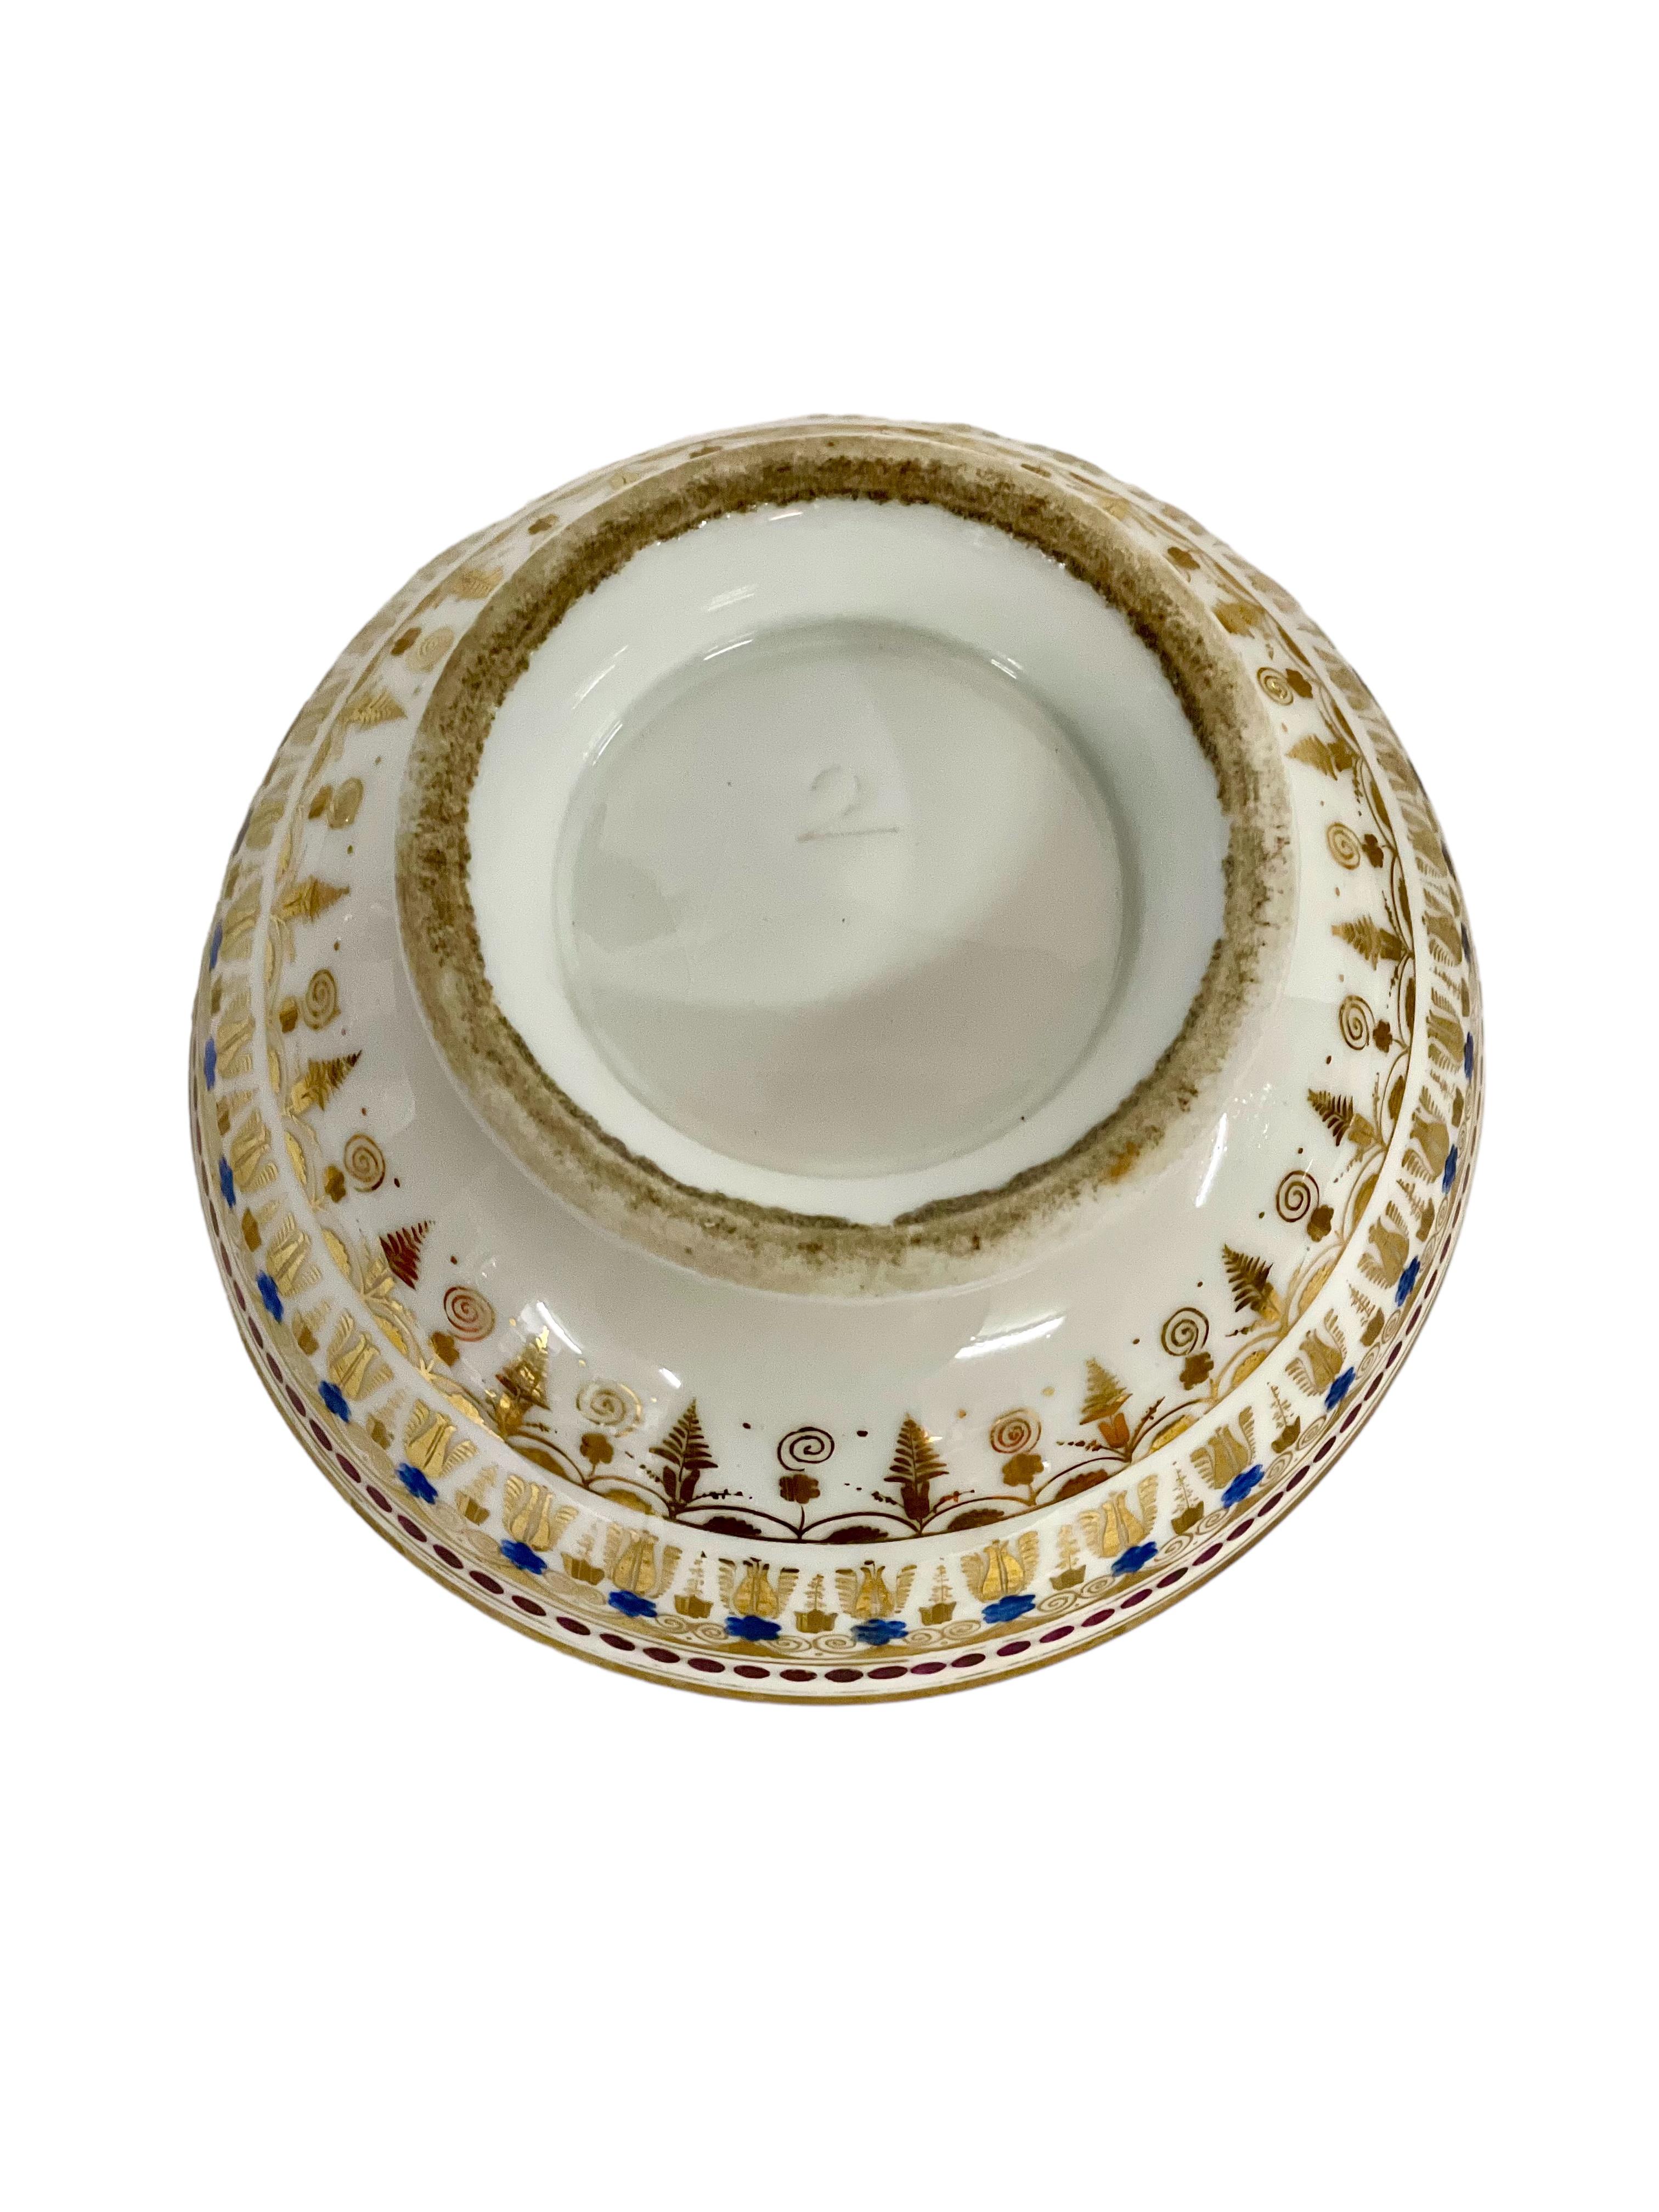 Old Paris Porcelain Wash Jug and Basin with Gilt Decoration For Sale 4